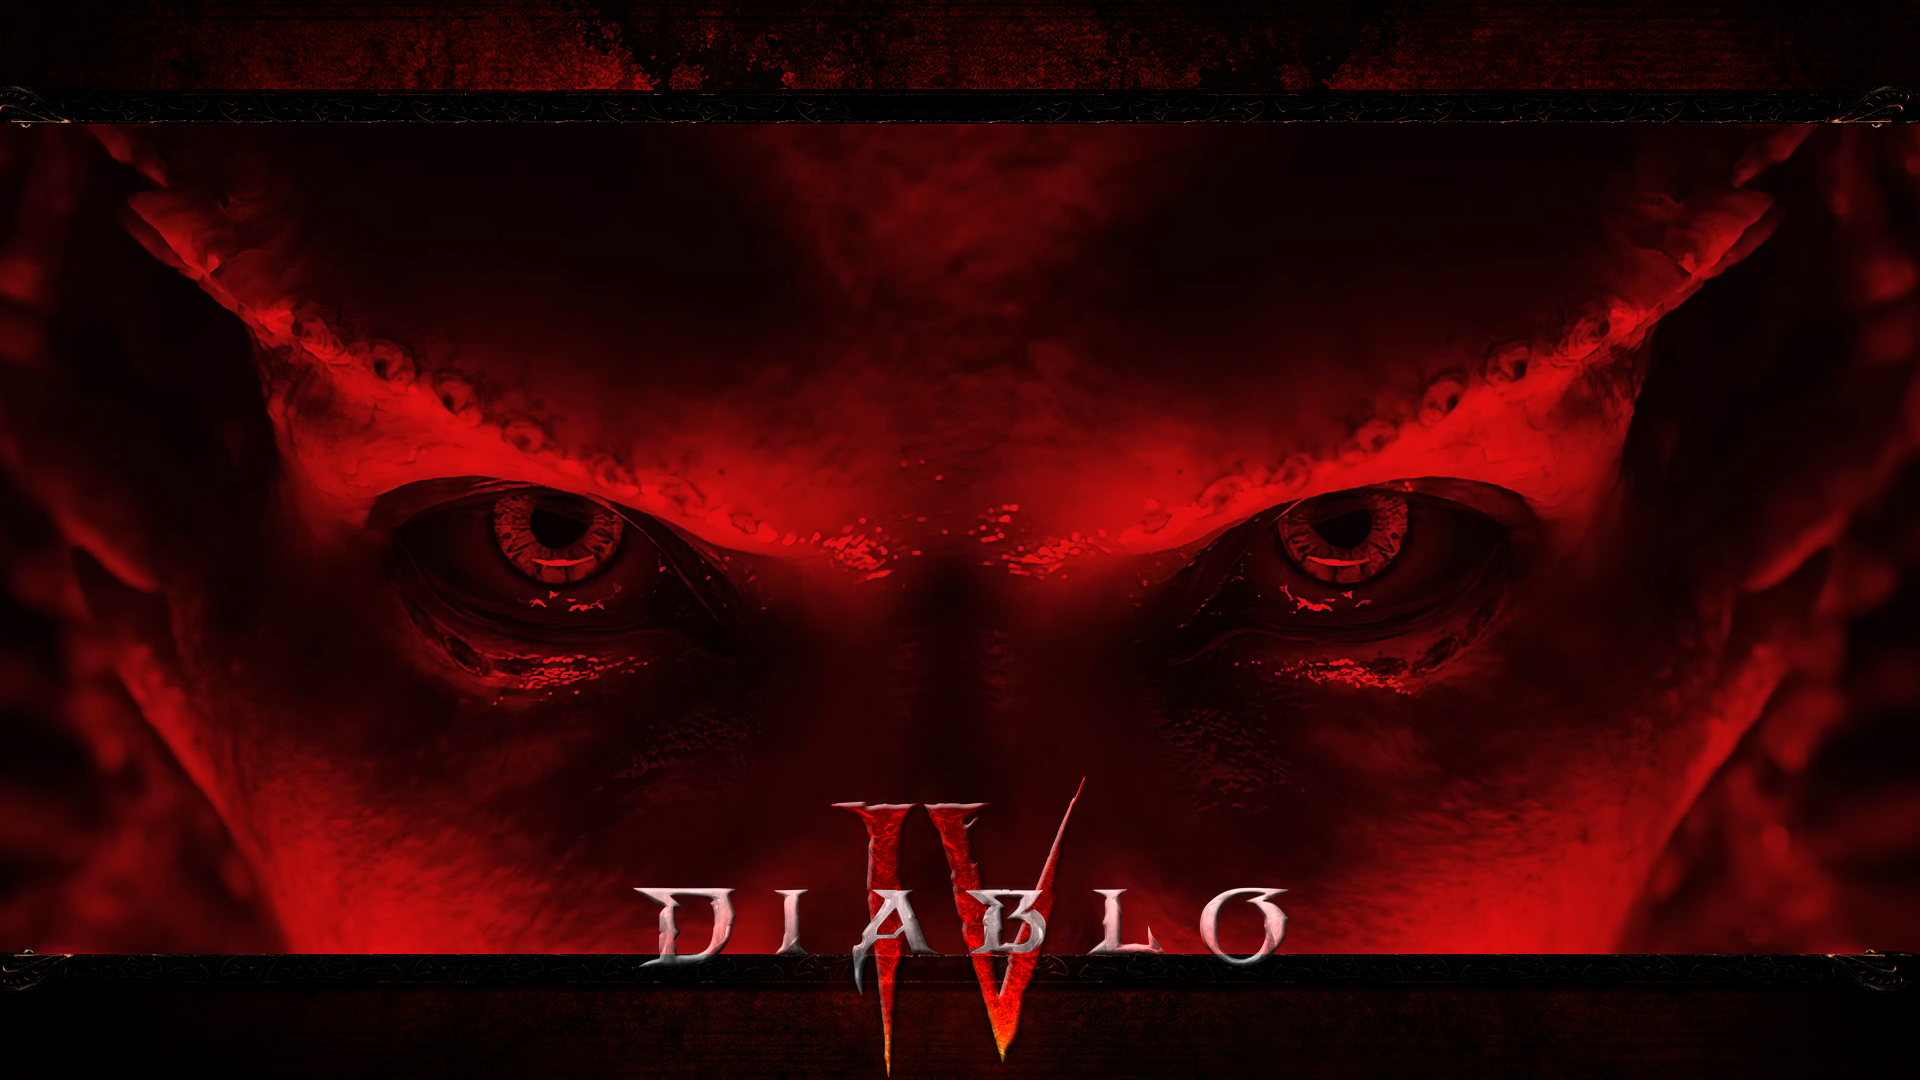 Diablo IV Wallpapers - Wallpaper Cave